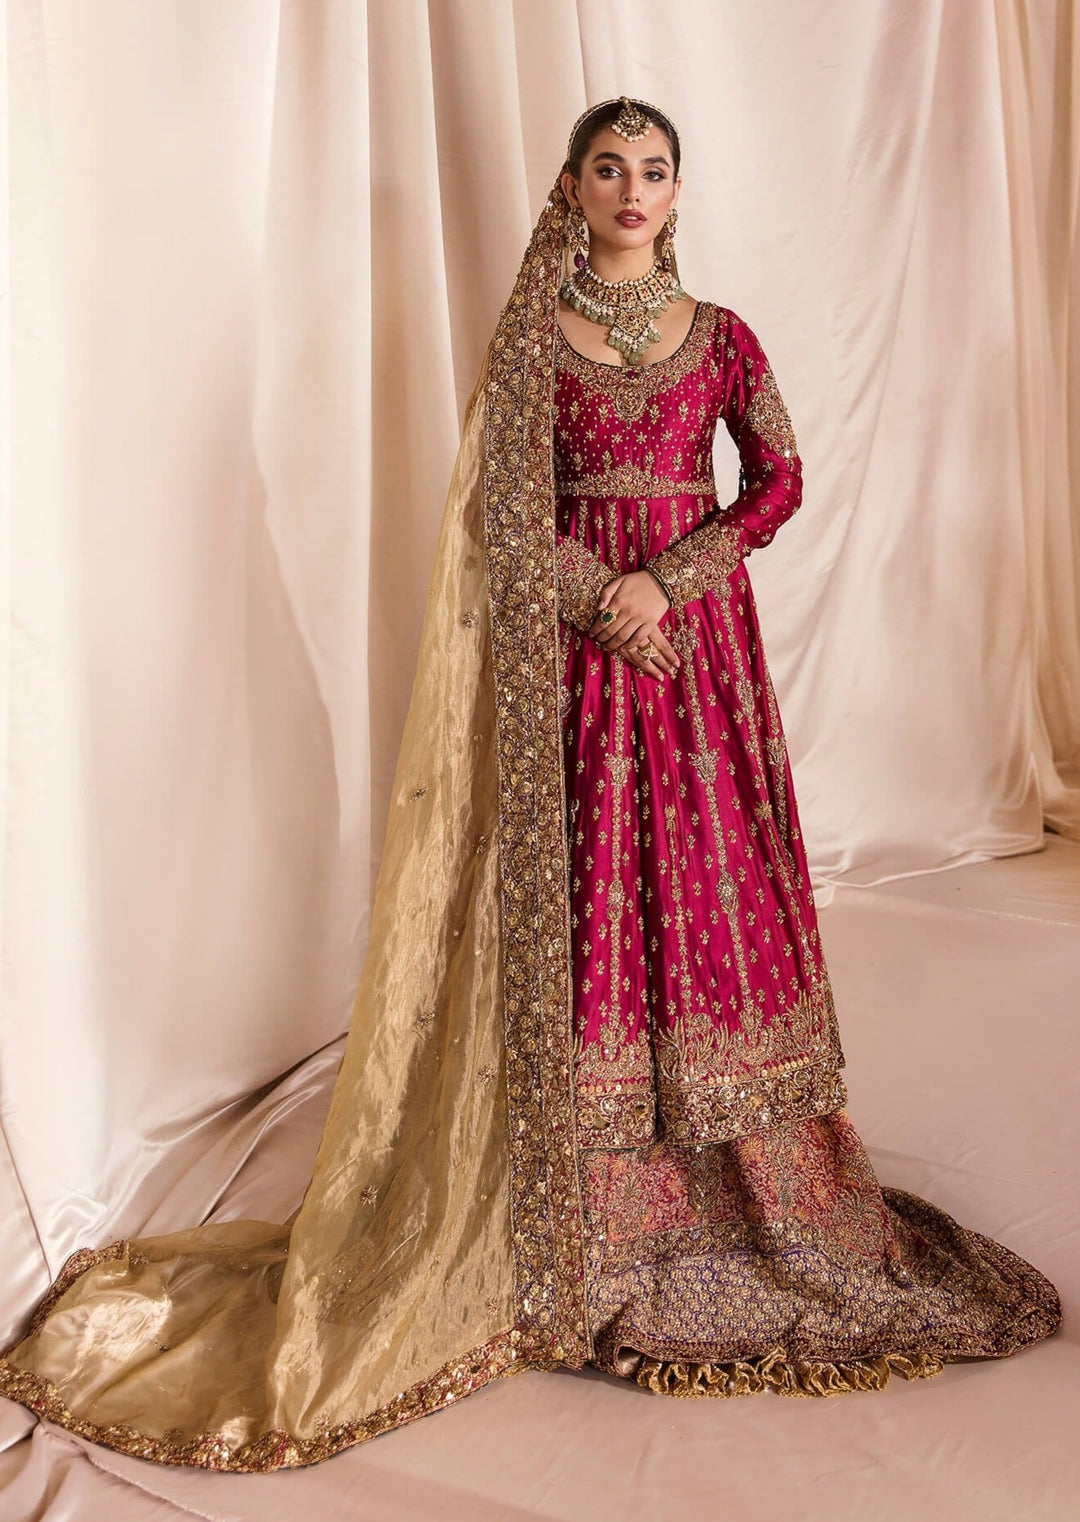 Pakistani Actress Hania Aamir Inspired Ethereal Bridal Looks | Nikah Bridal  Dress